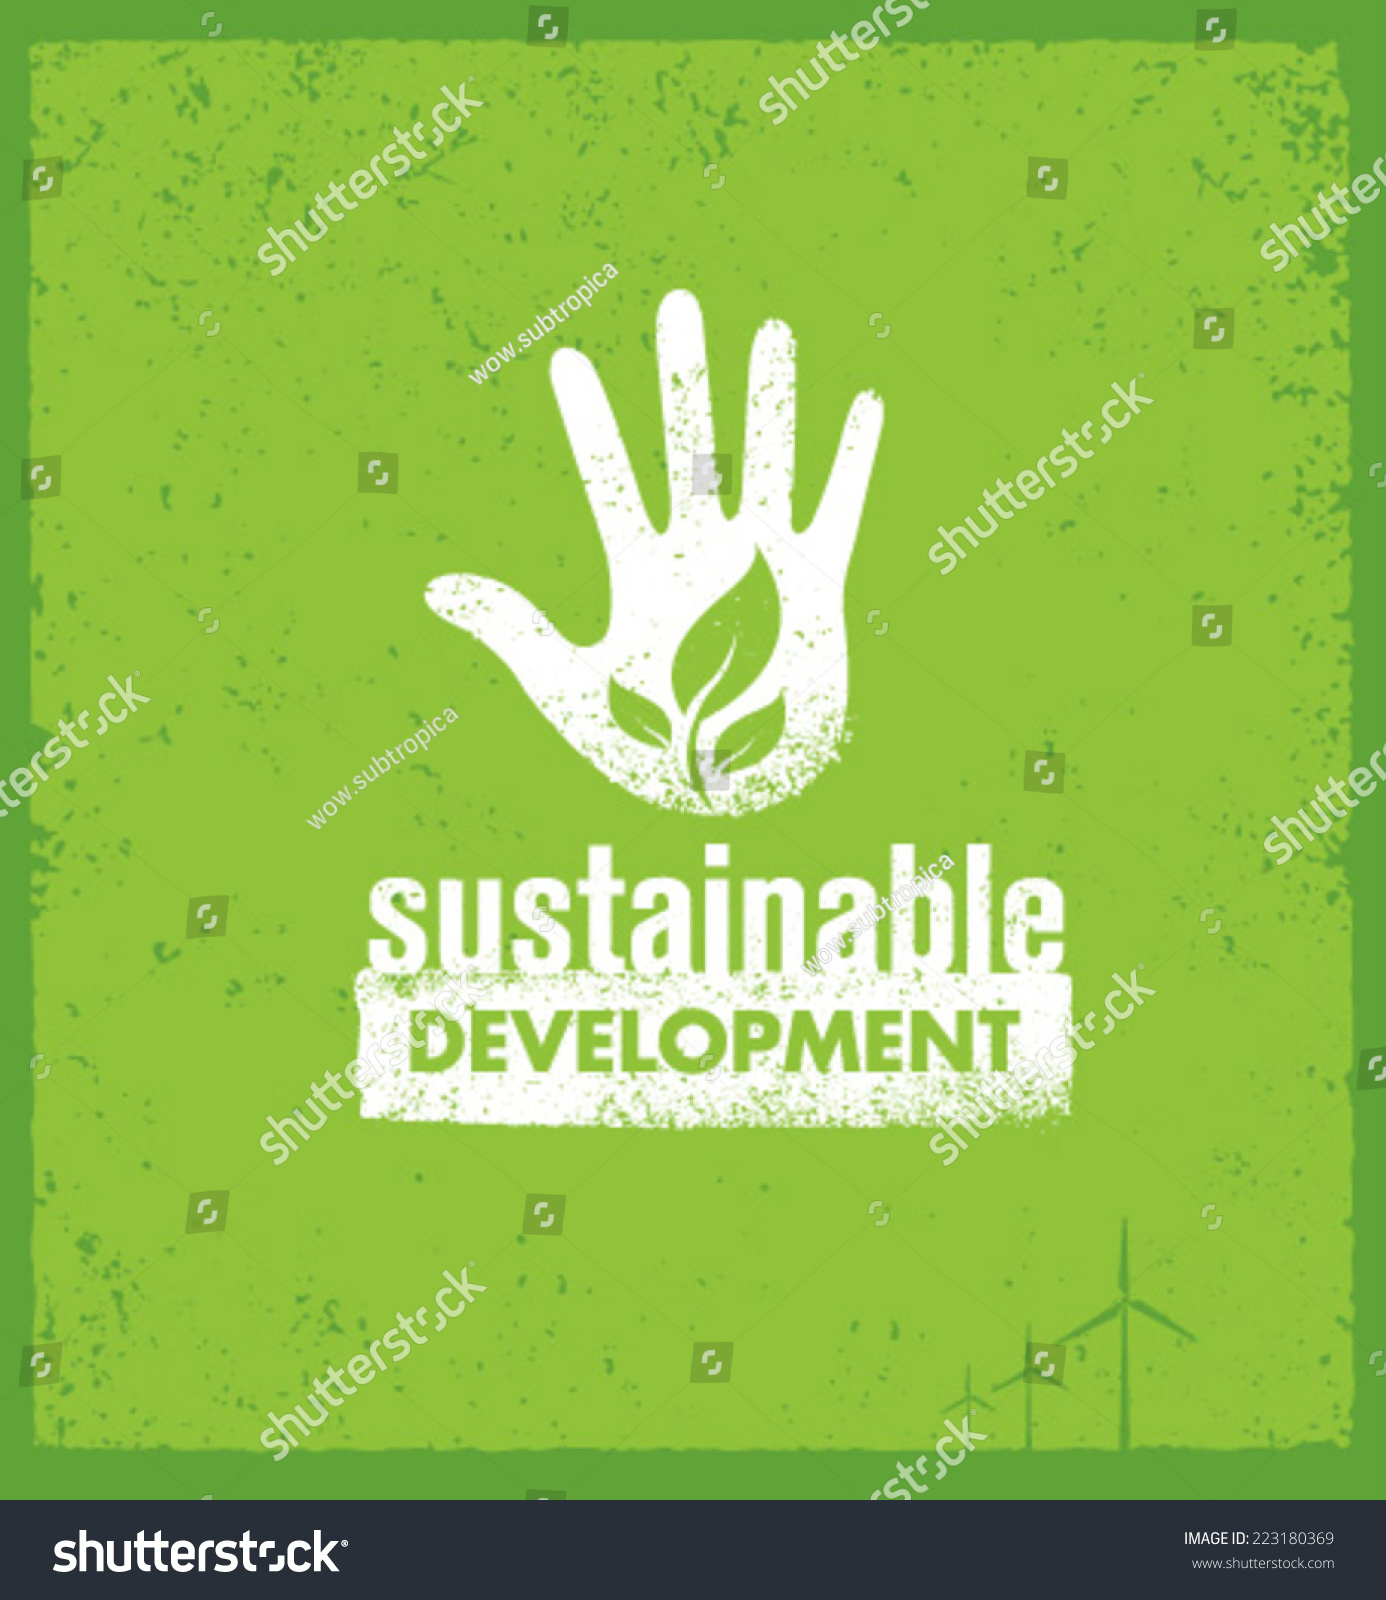 Sustainable Development Motivation Vector Design Element Stock ...